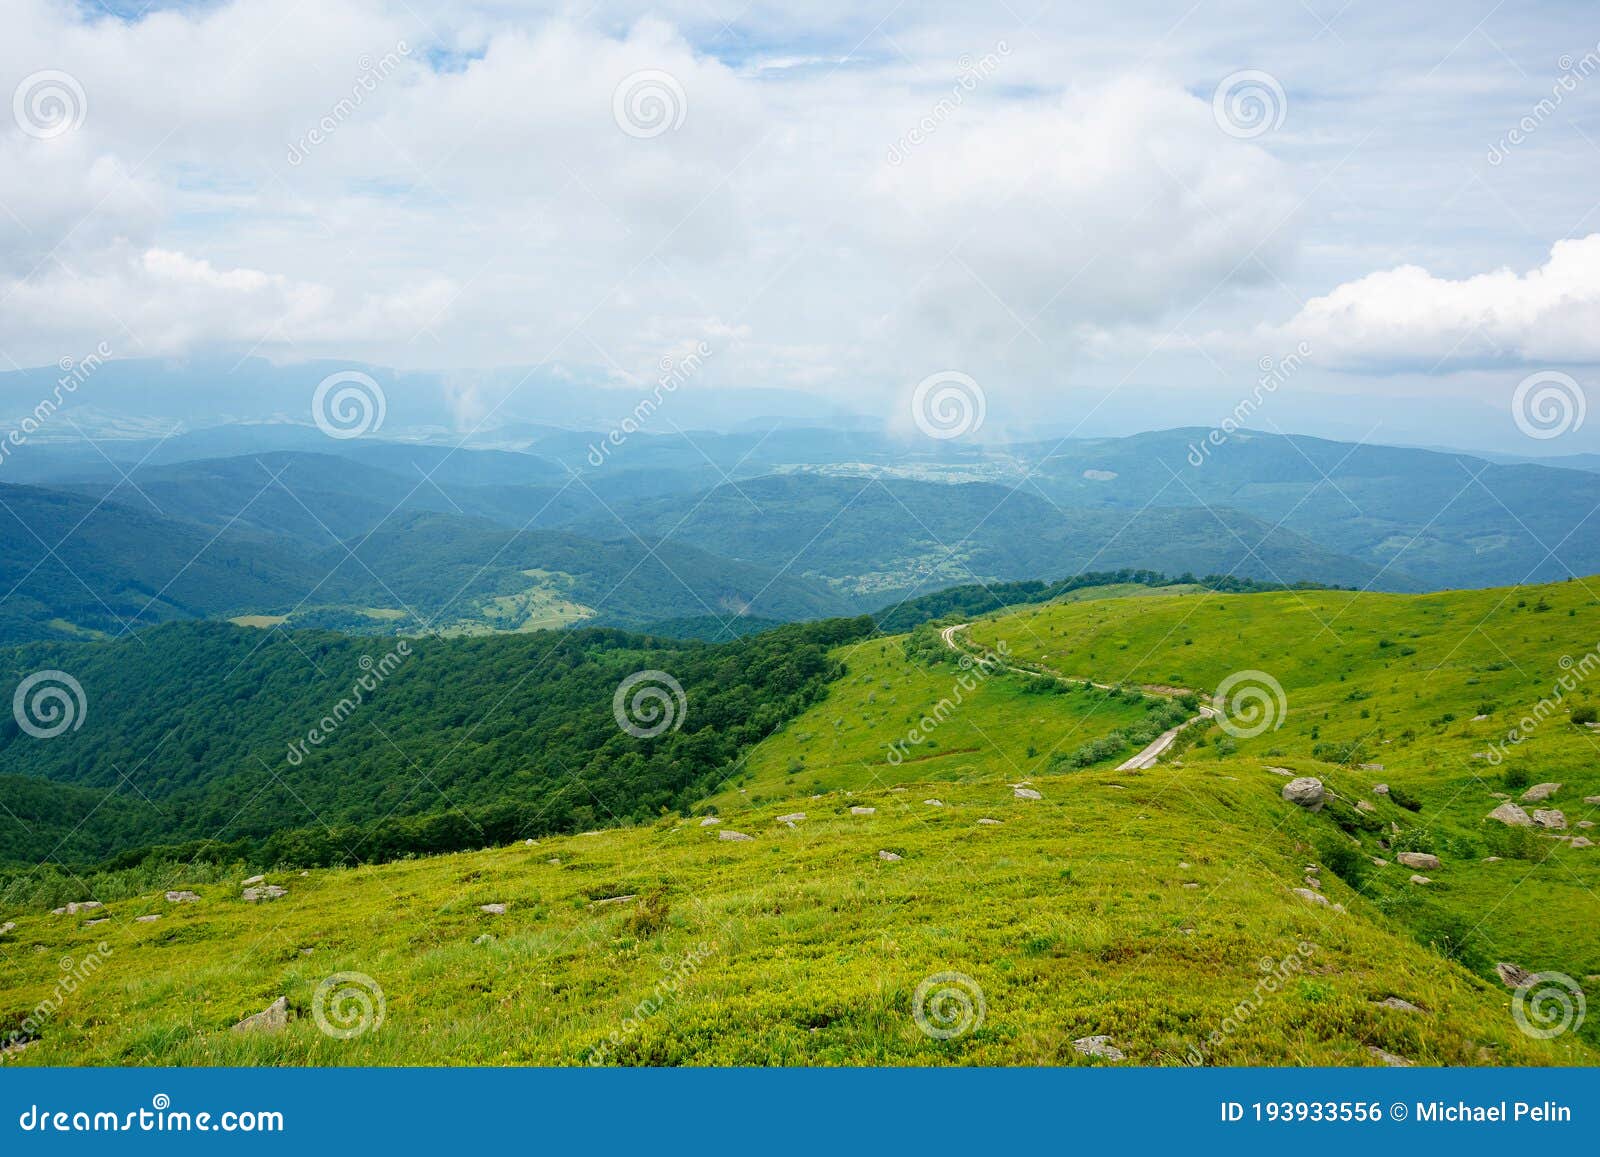 summer landscape of runa mountain